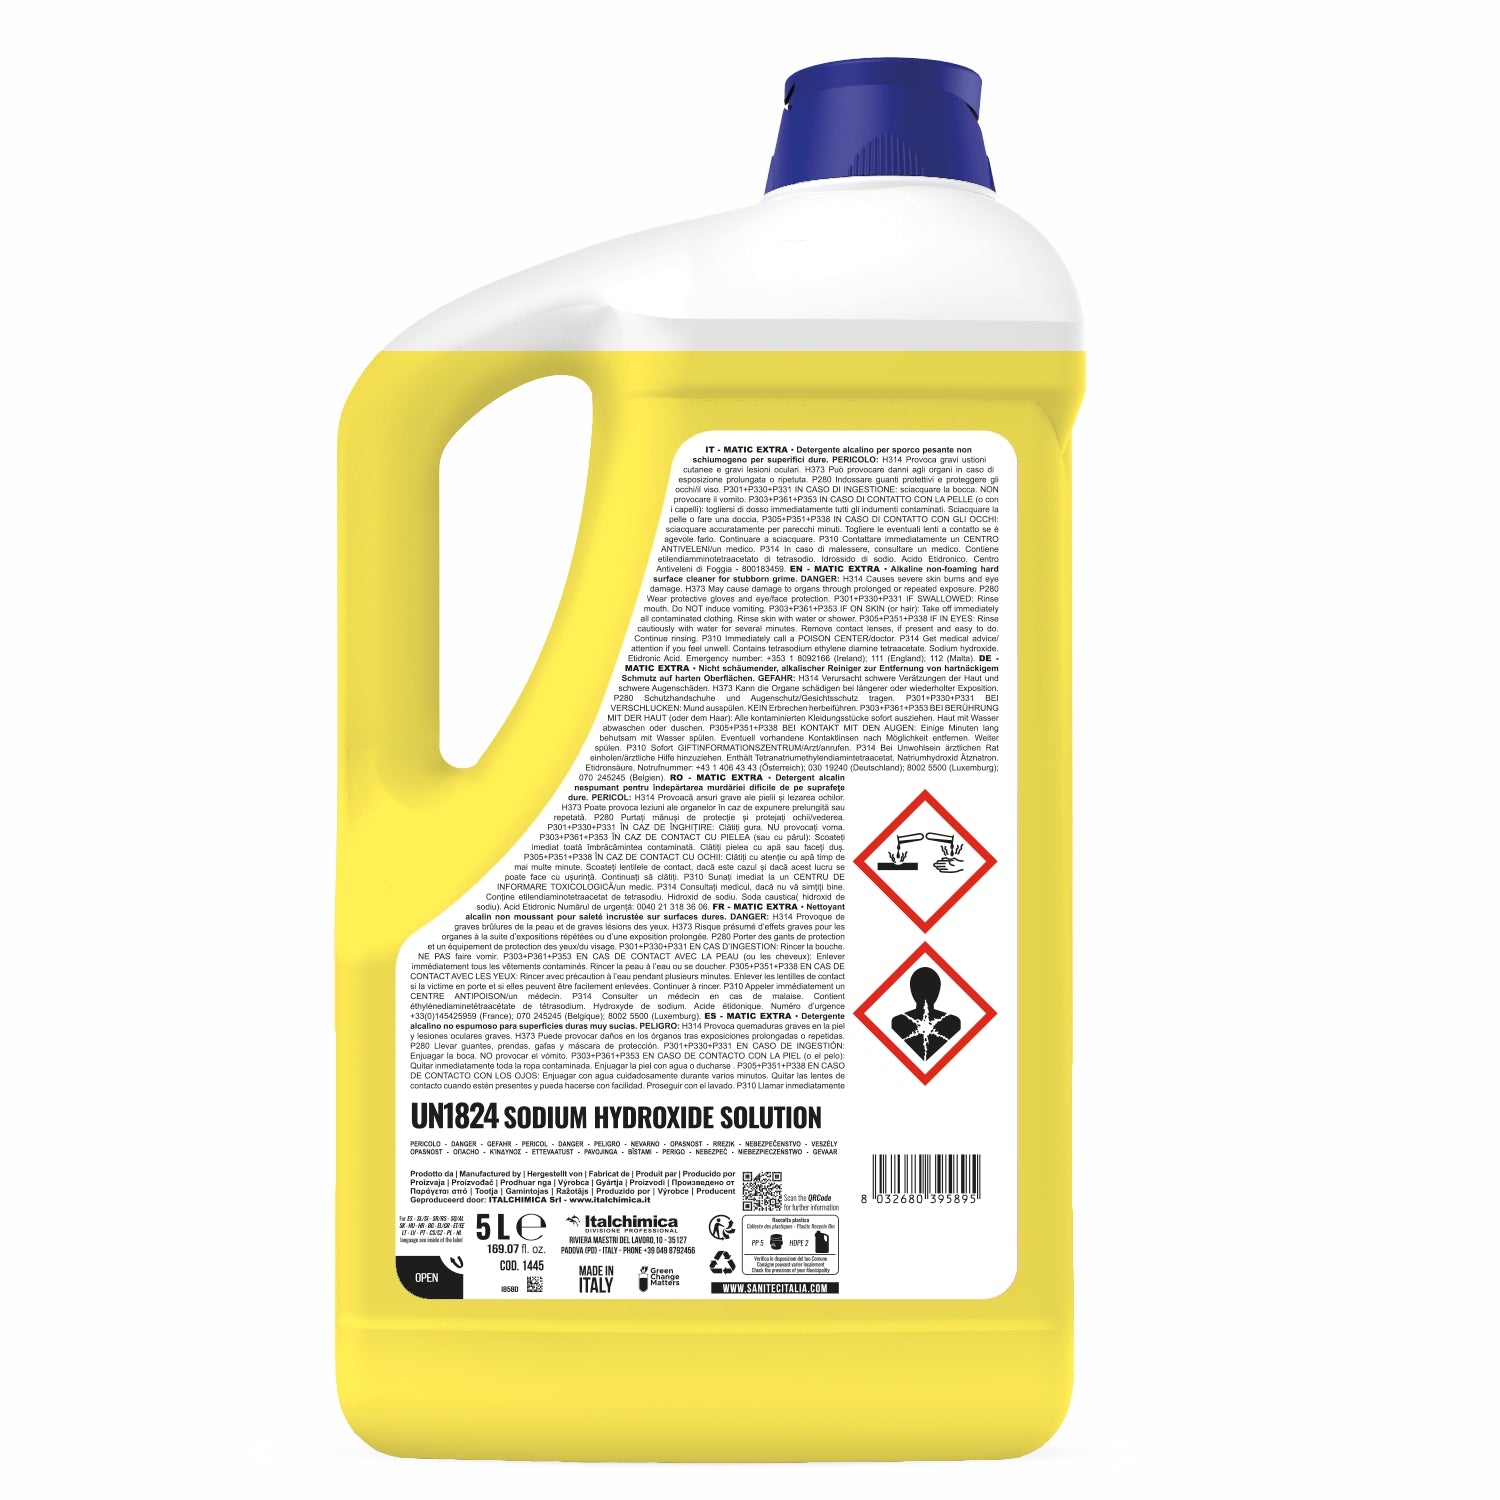 Detergente pavimenti Matic extra alcalino per sporco pesante non schiumogeno per superfici dure 5 LT sanitec 1445